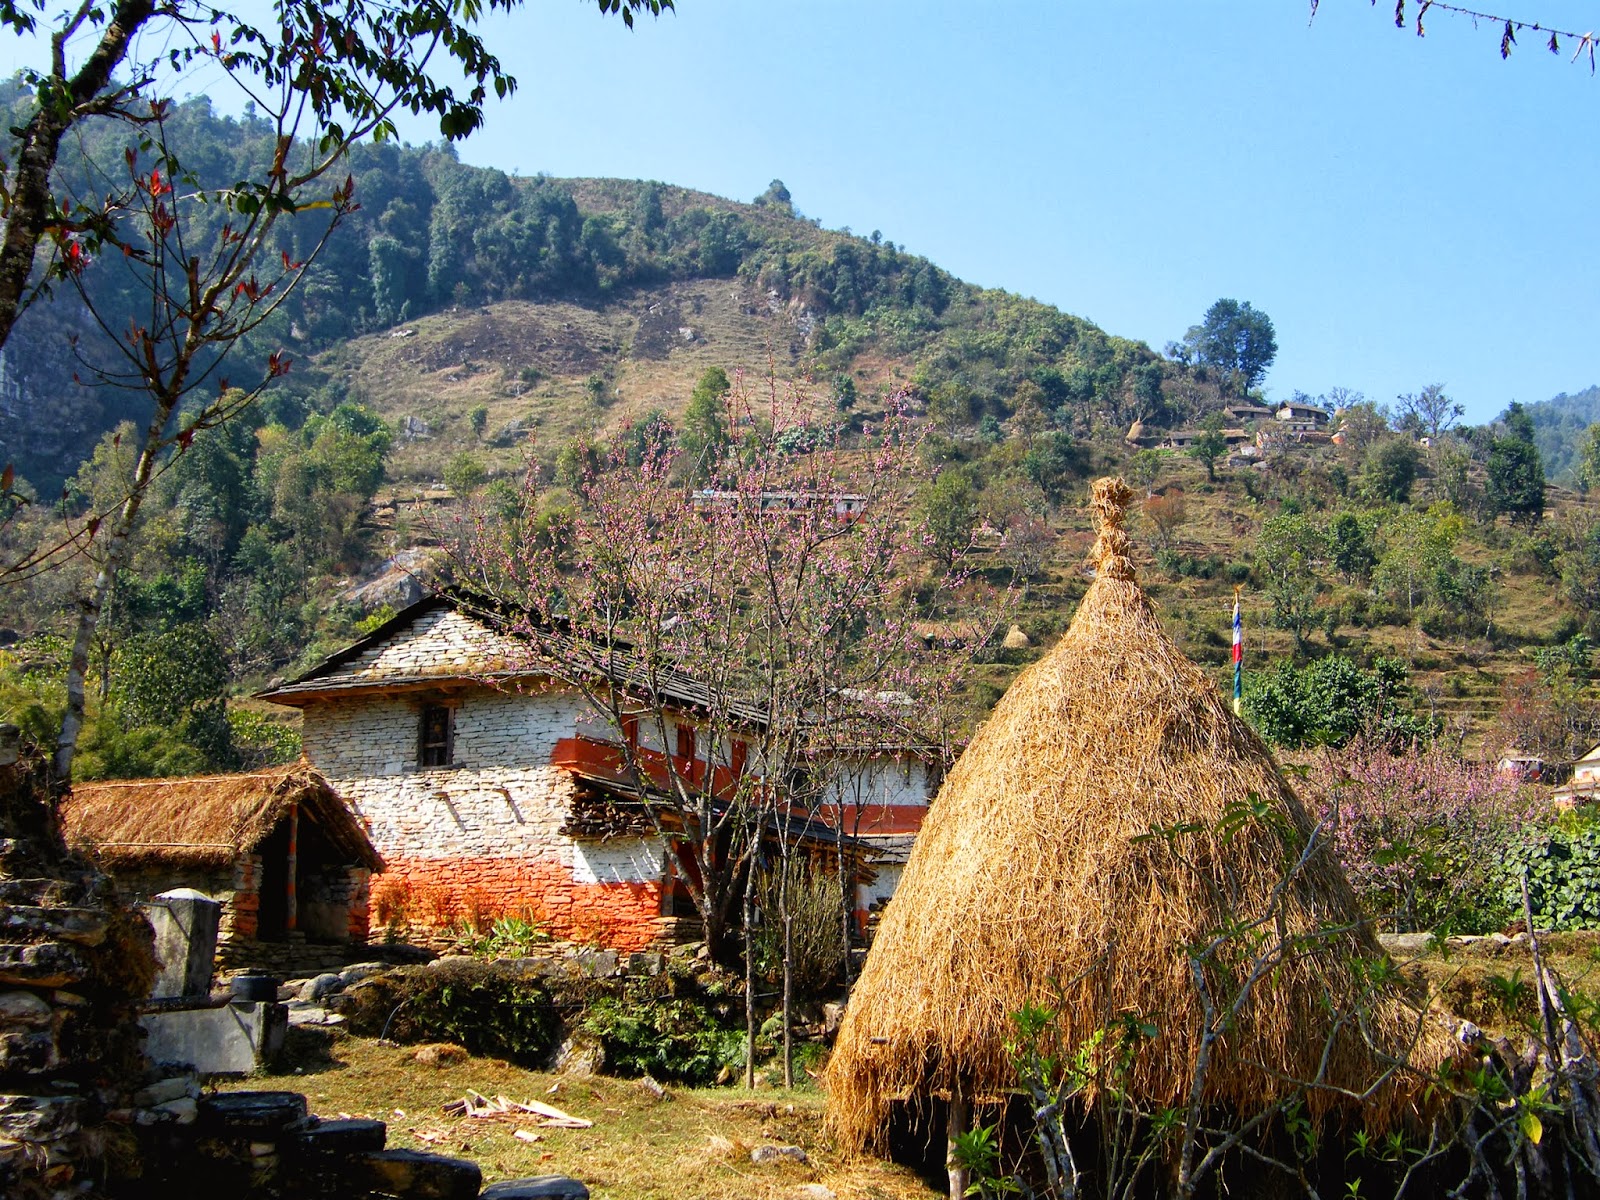 Nepali village